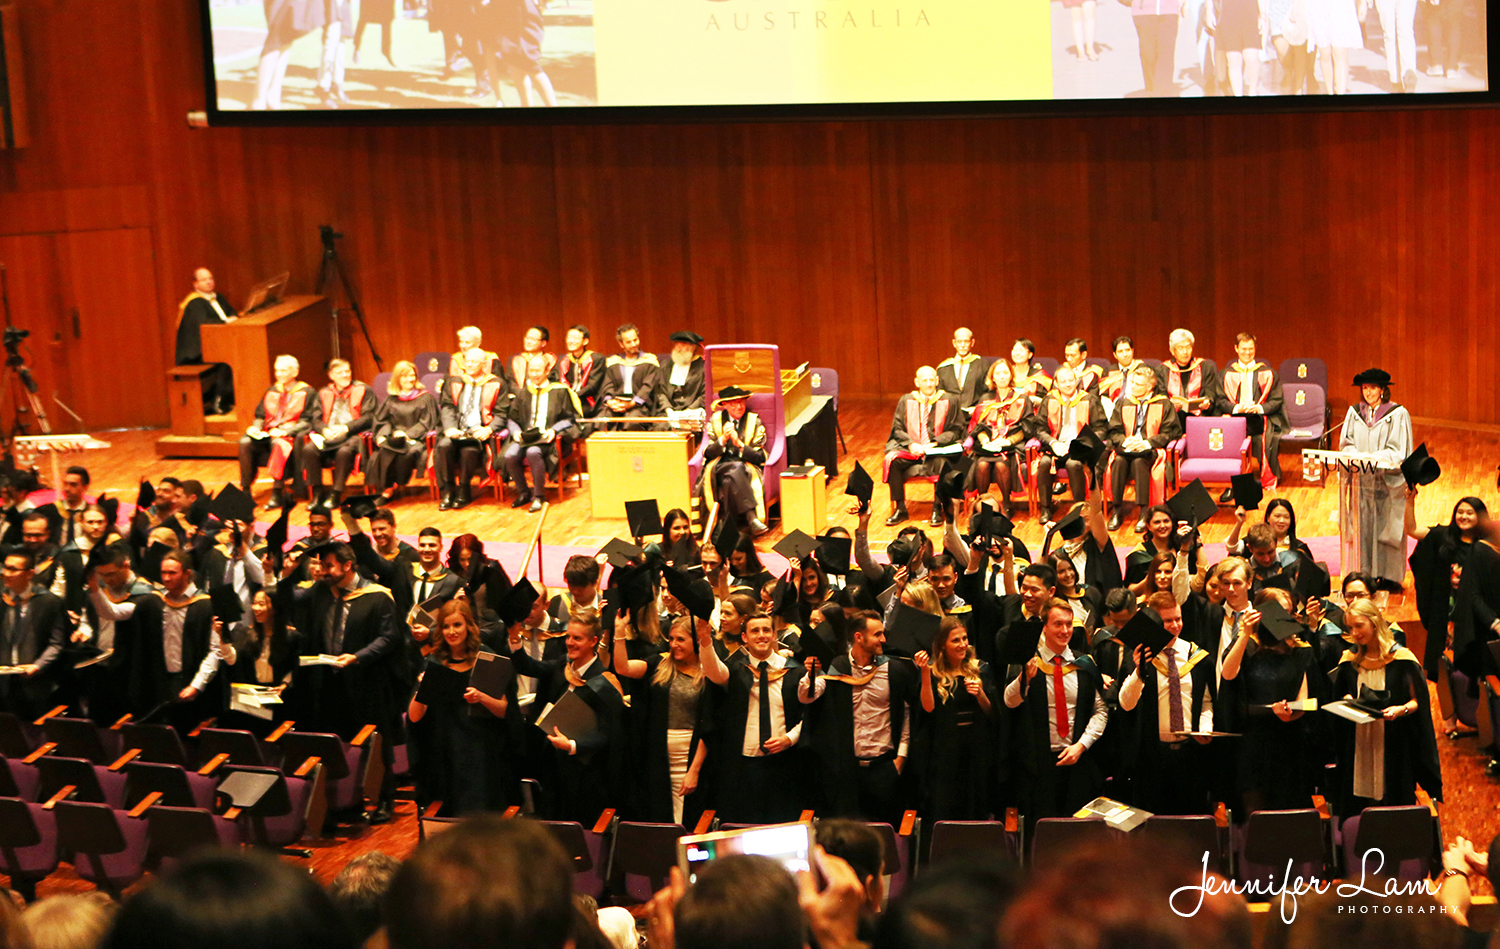 UNSW - Sydney Graduation Photos - Jennifer Lam Photography (26).JPG